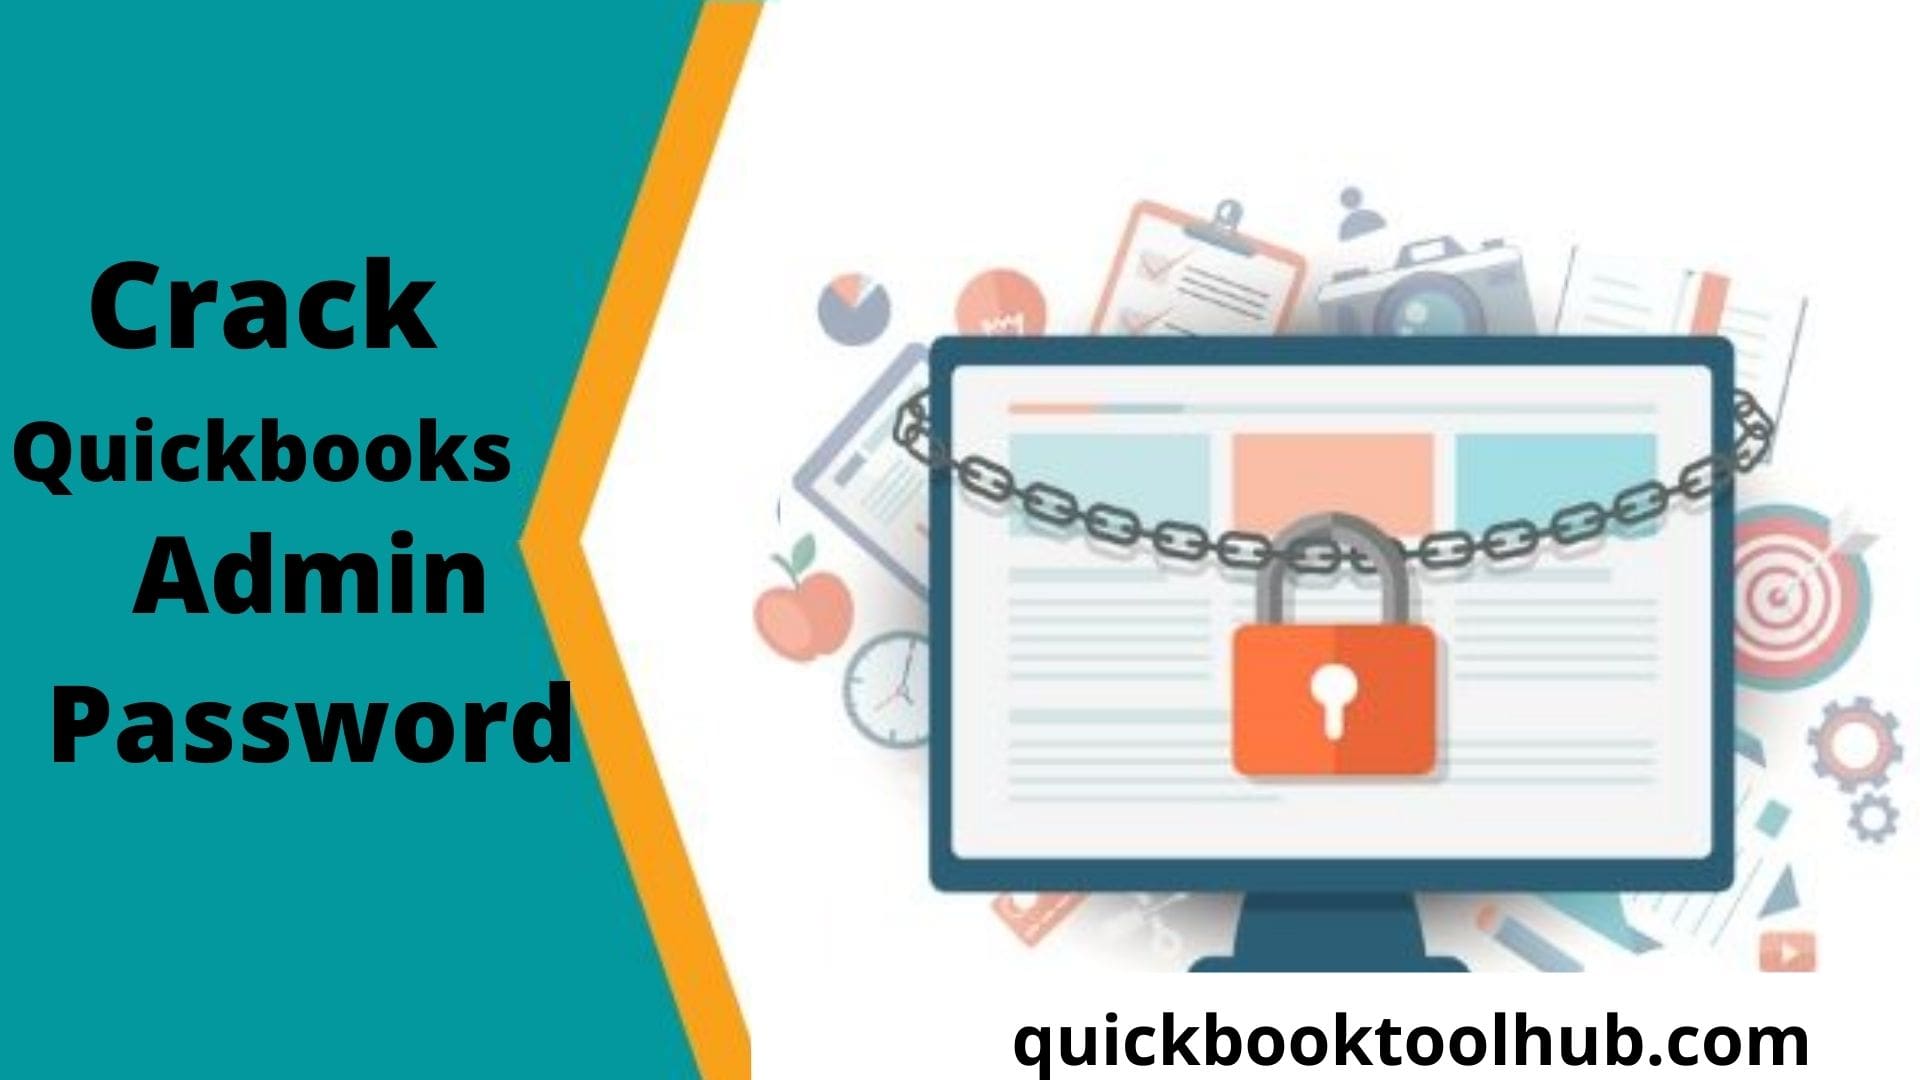 Simple steps to crack Quickbooks admin password